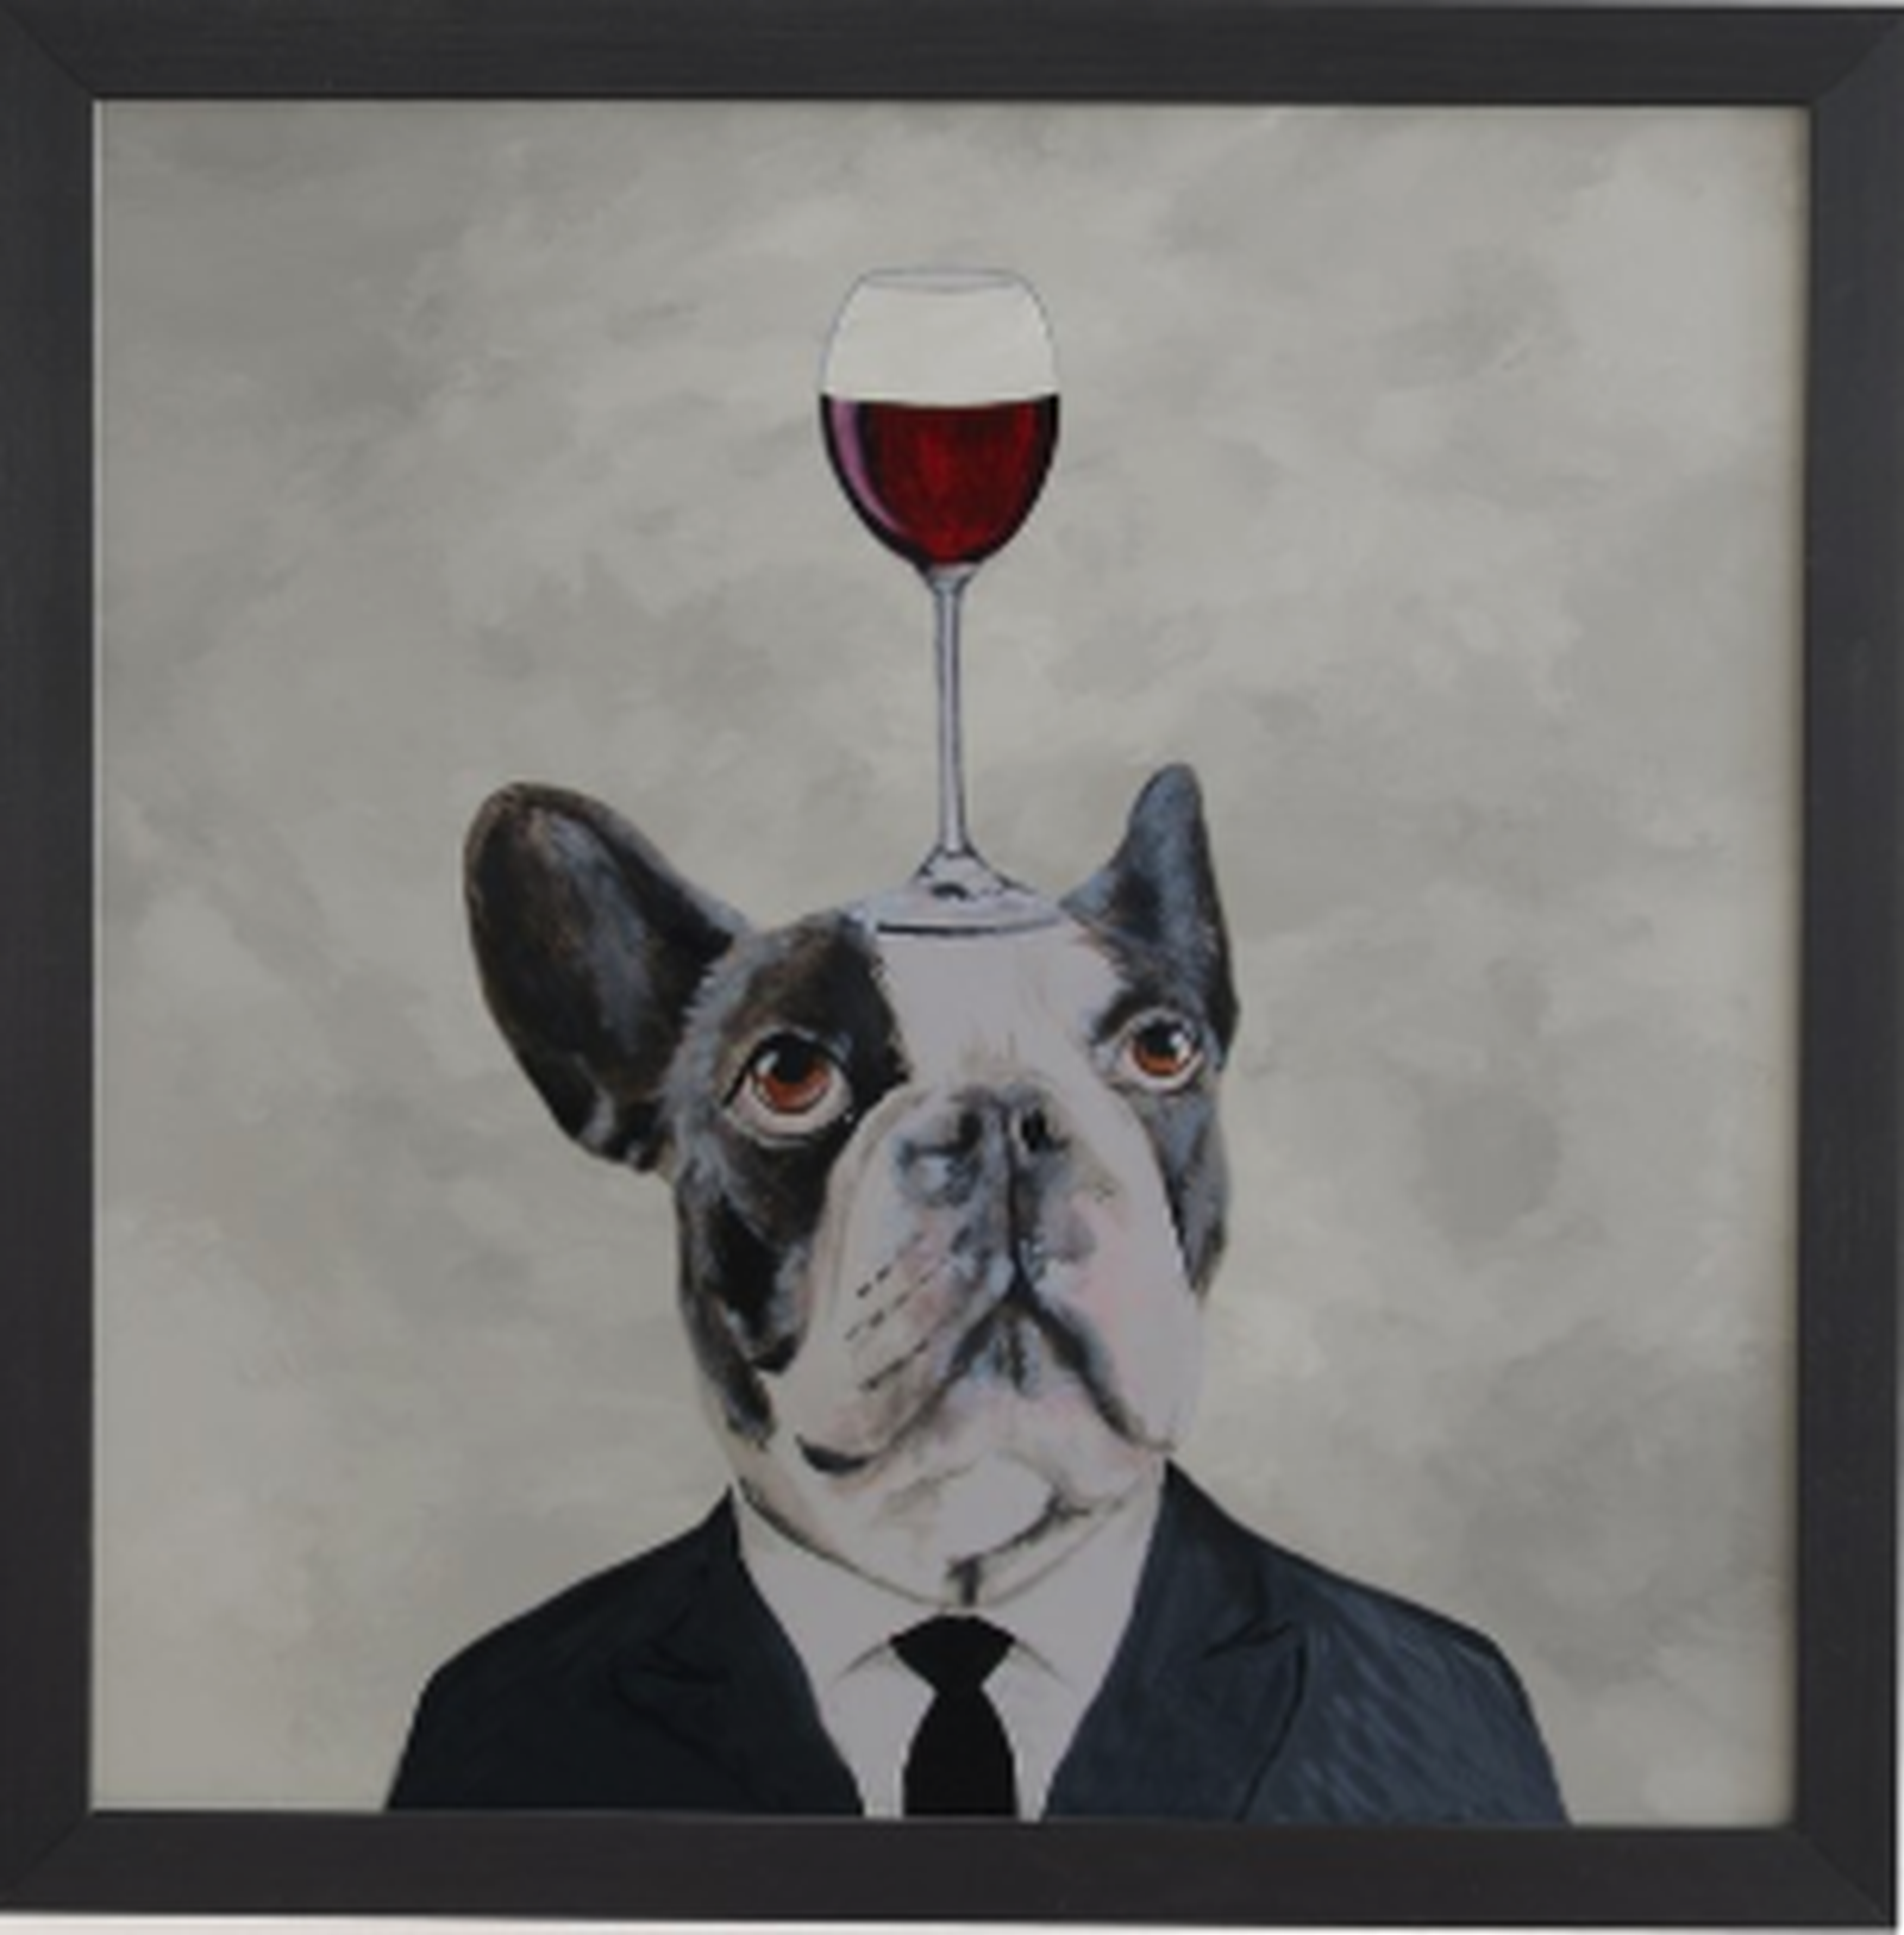 Bulldog with wine glass - black frame artwork - 30"x30" - Wander Print Co.